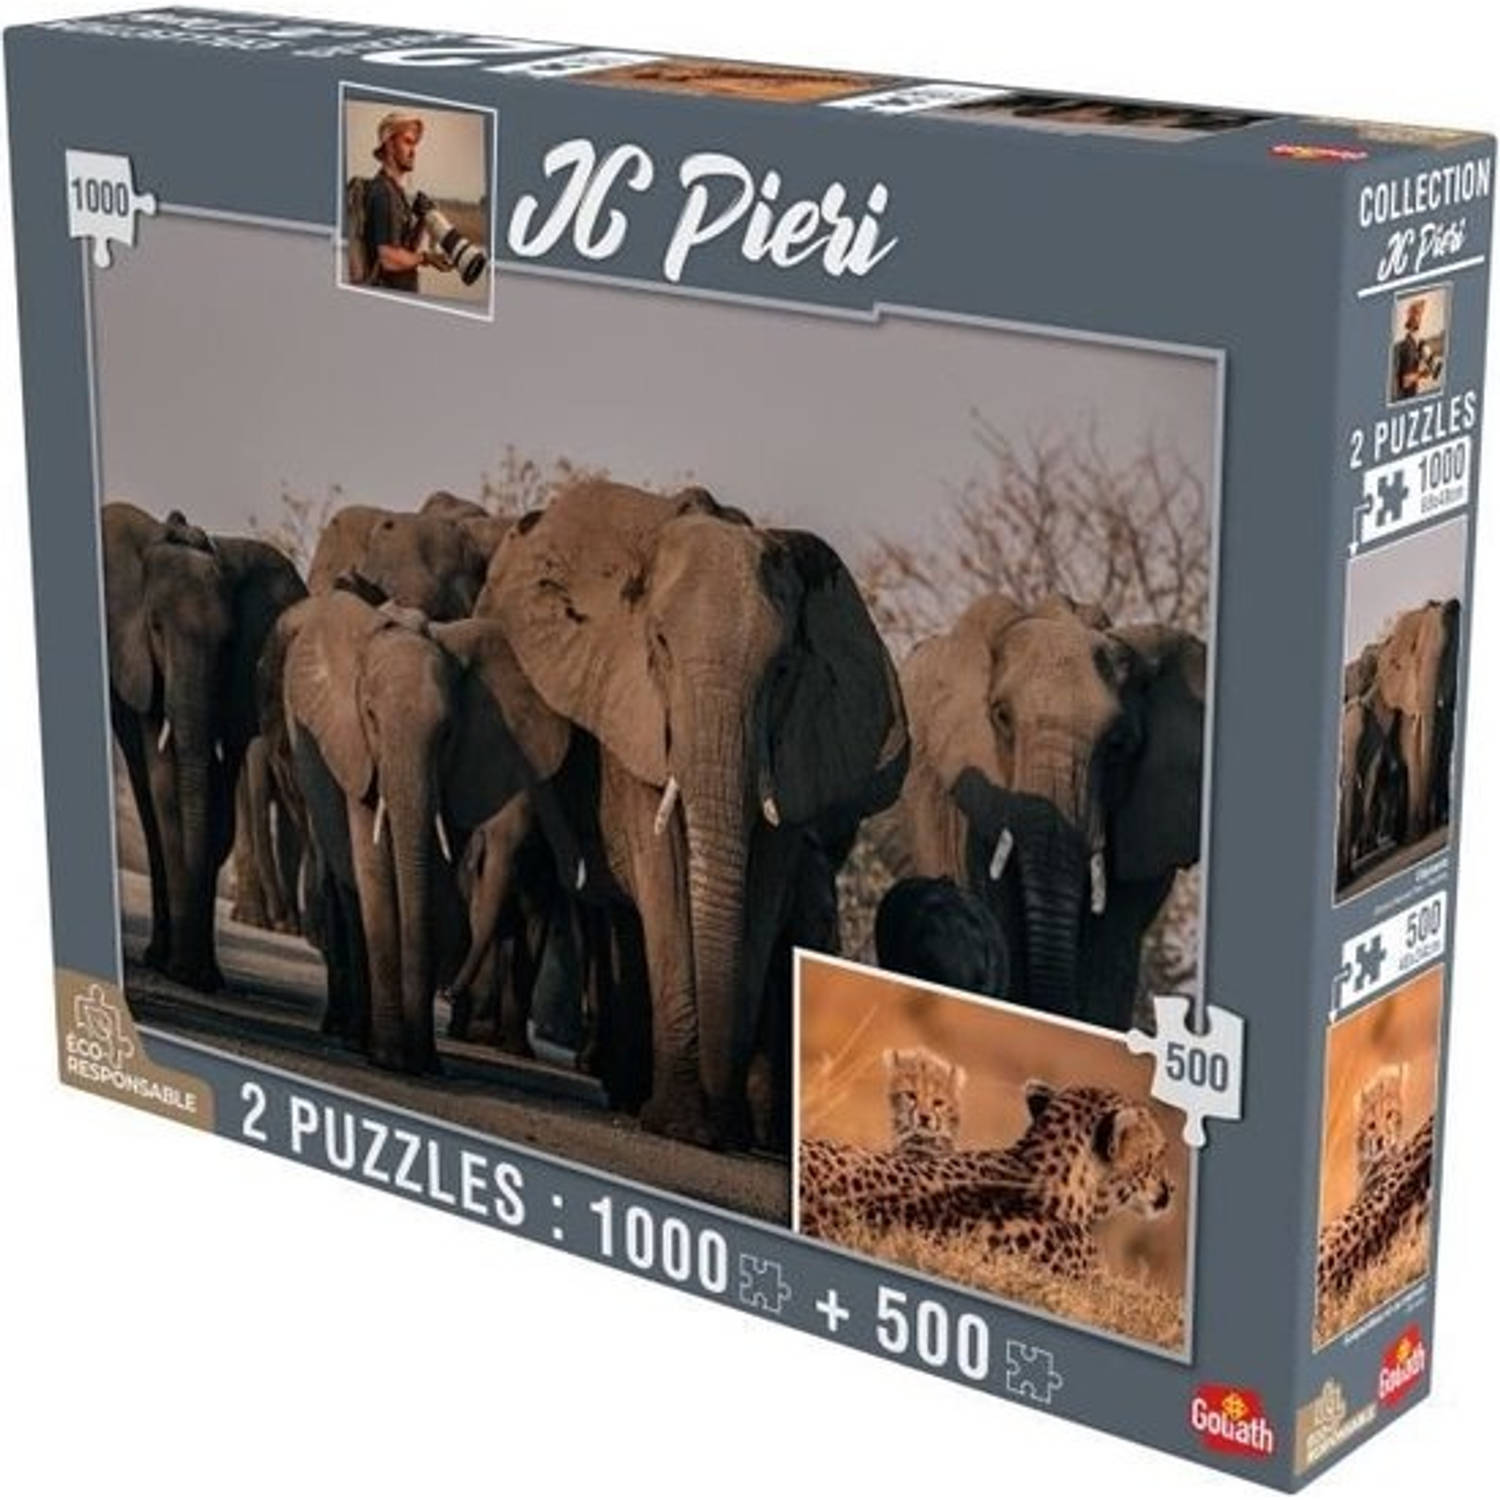 Goliath JC Pieri Collection Puzzel Olifanten (Namibië) en welpen (Tanzania) 1000 en 500 stukjes